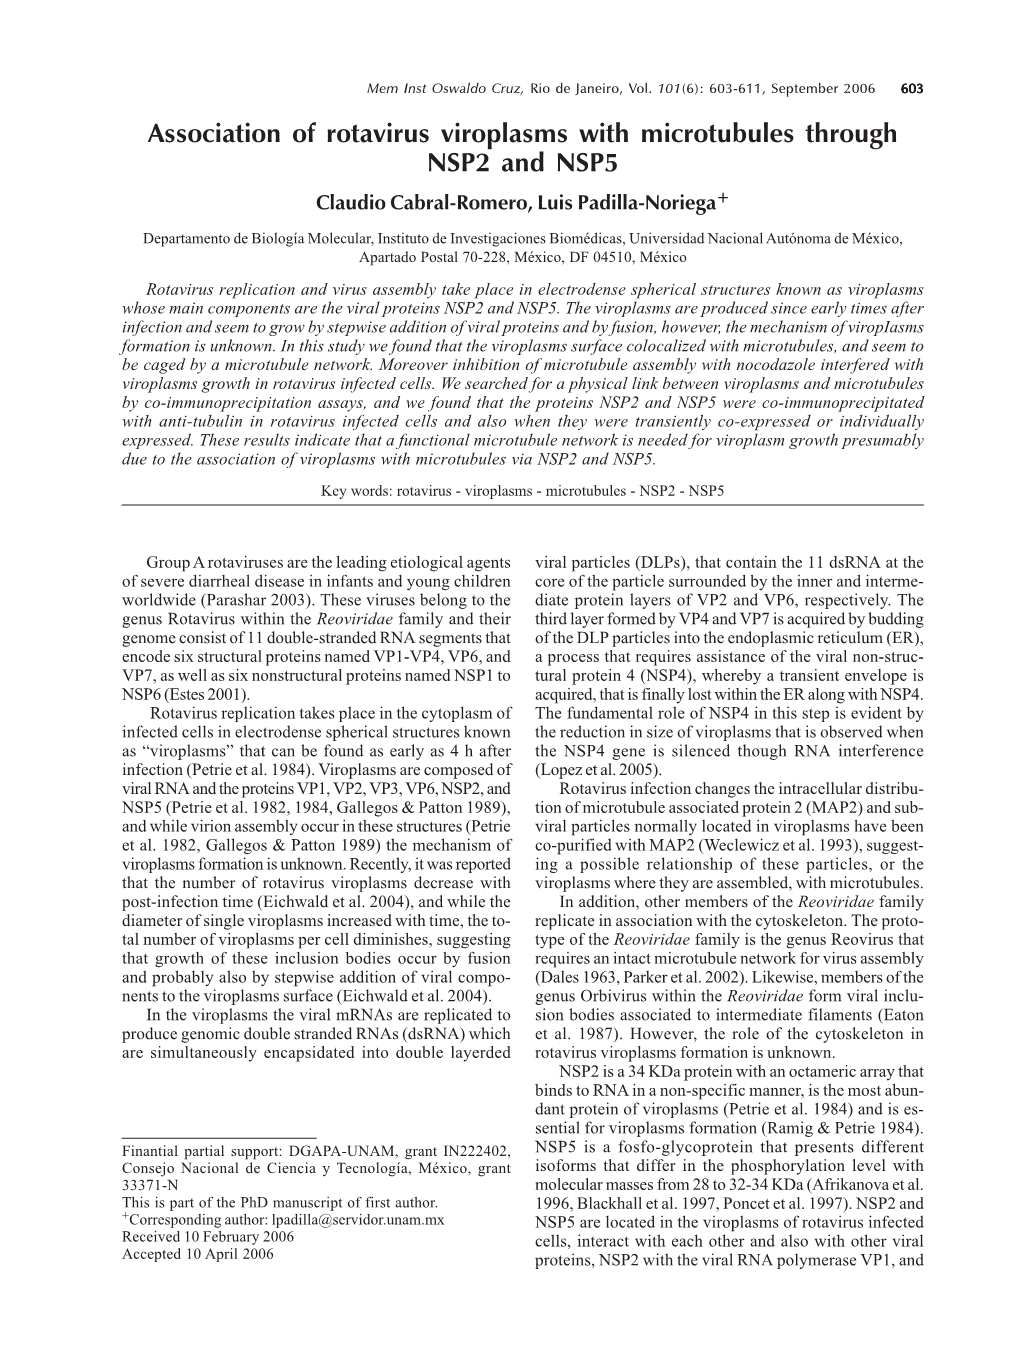 Association of Rotavirus Viroplasms with Microtubules Through NSP2 and NSP5 Claudio Cabral-Romero, Luis Padilla-Noriega+